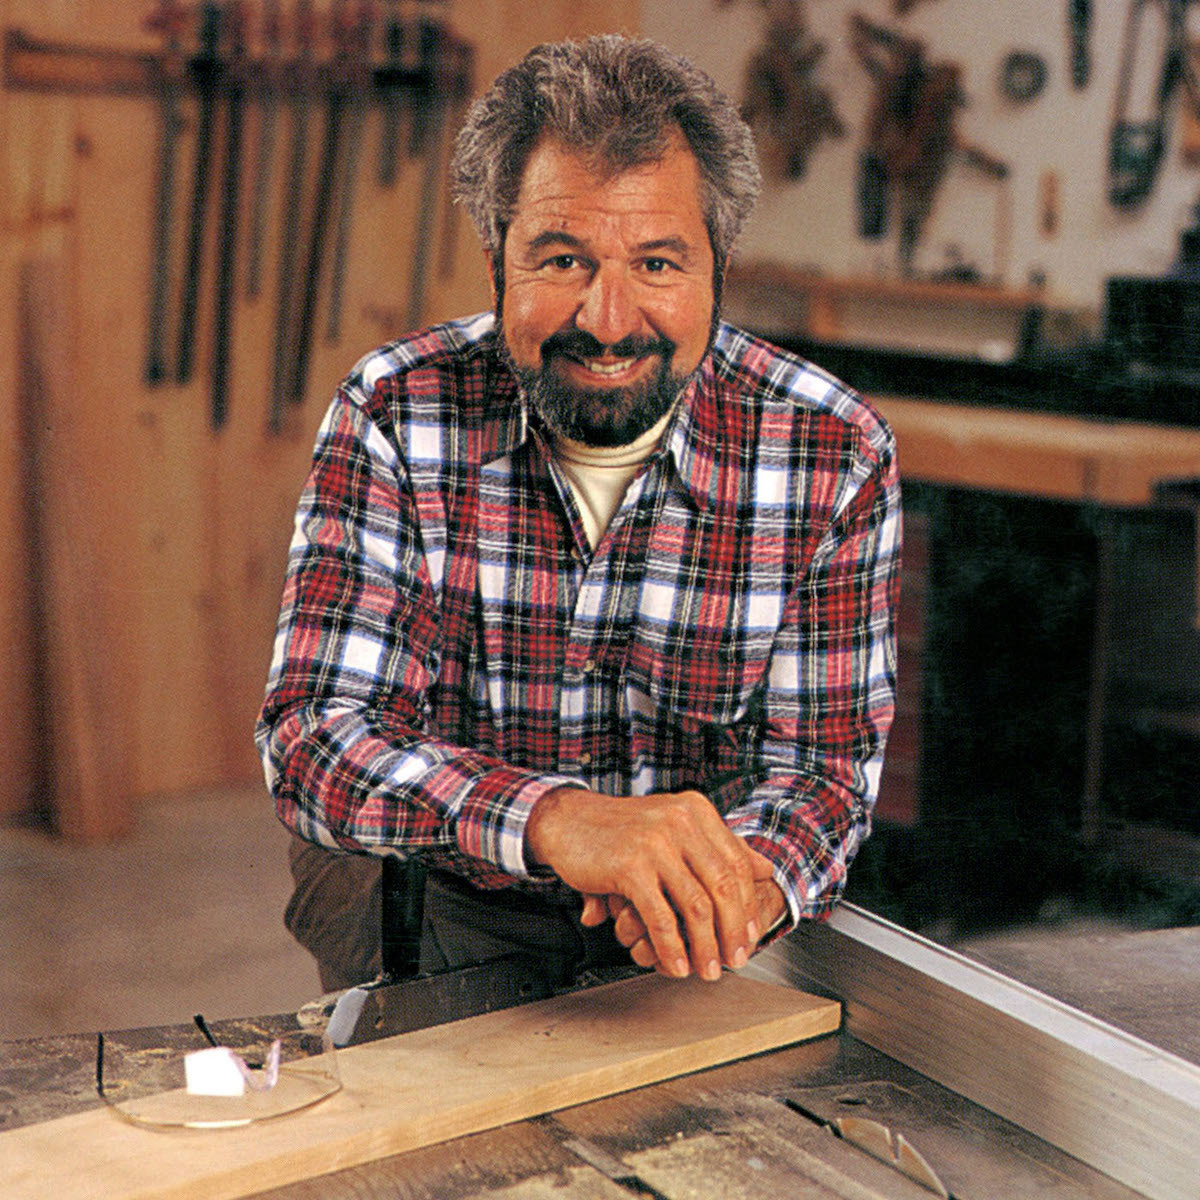 Bob Vila in a plaid shirt leans forward in a woodworking workshop.